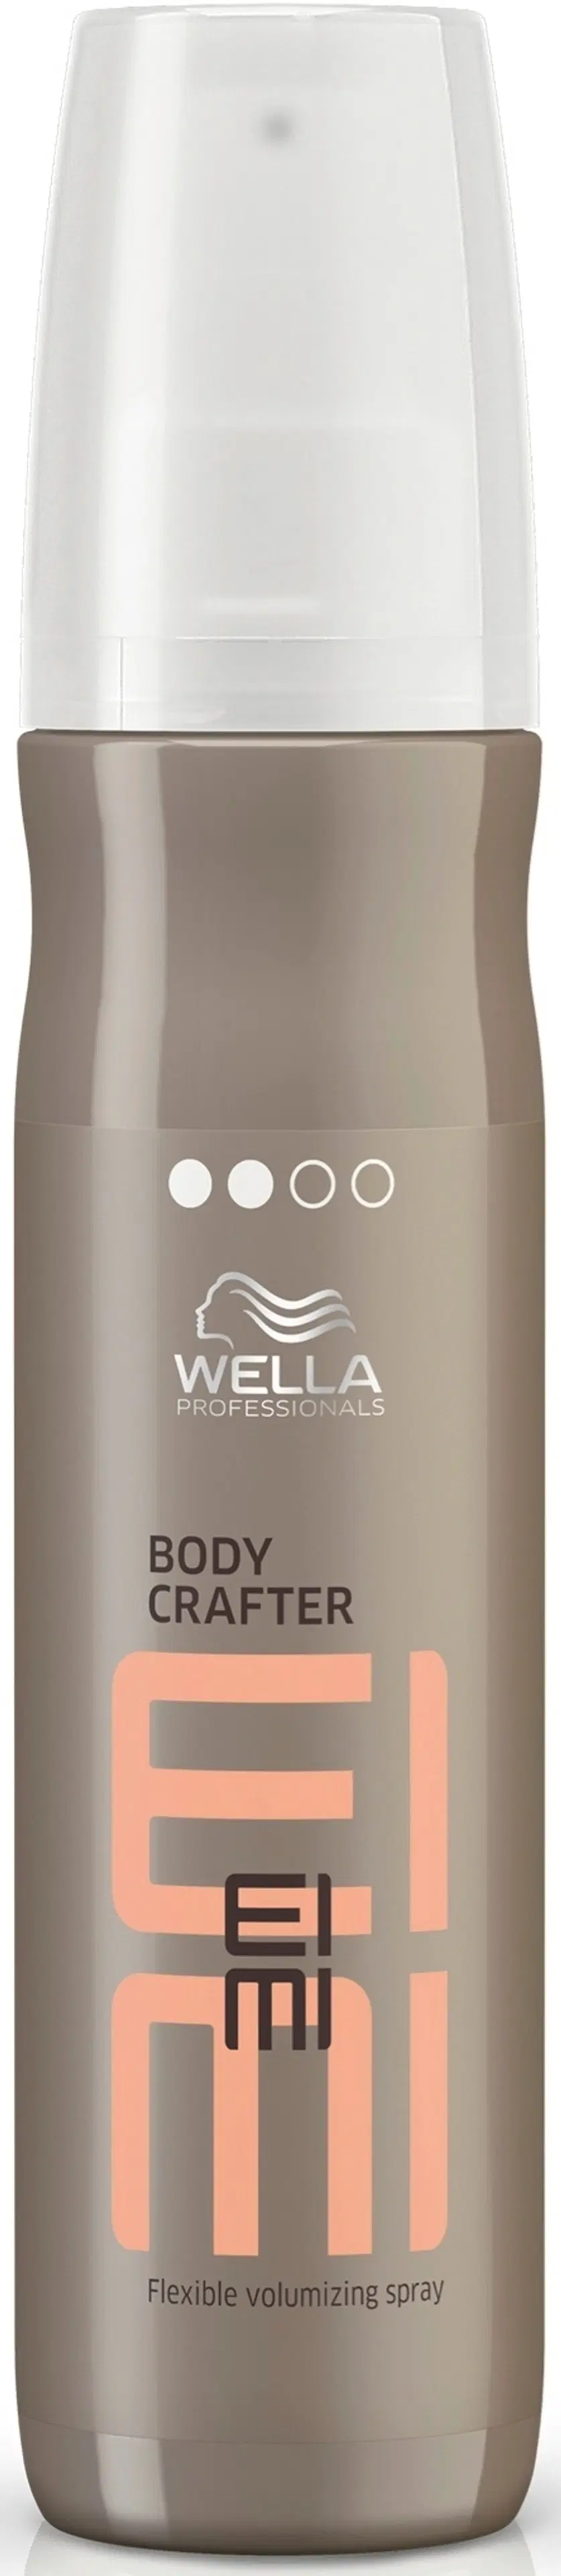 Wella Professionals EIMI Body Crafter Flexible volumizing spray volyymisuihke 150 ml